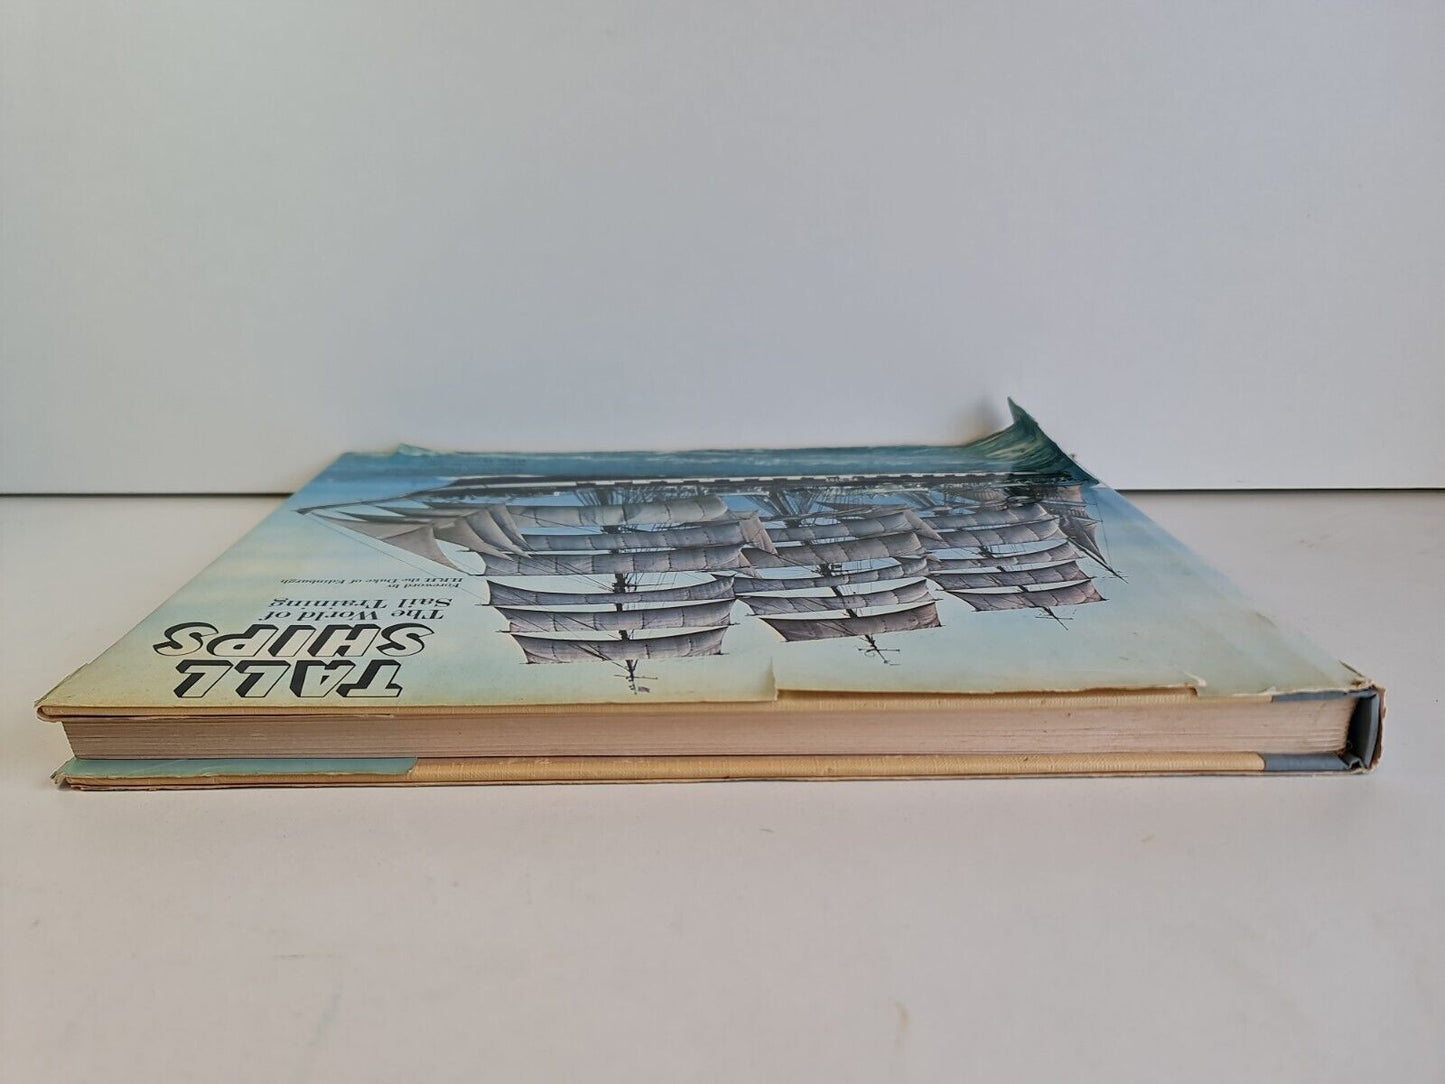 Tall Ships: World of Sail Training by Maldwin Drummond (1976)